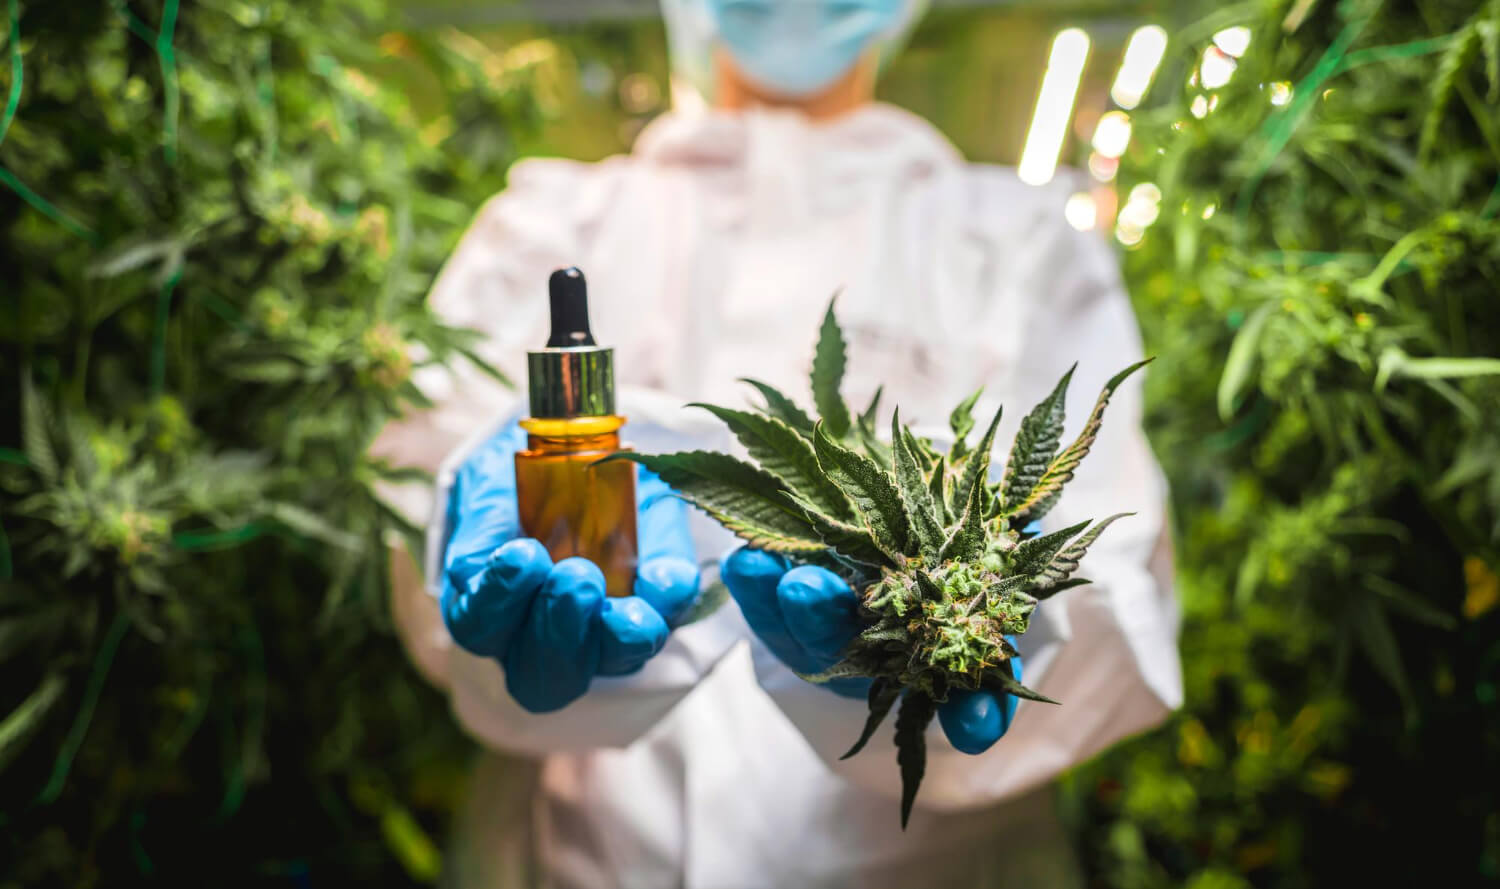 Ukraine legalizes medical cannabis